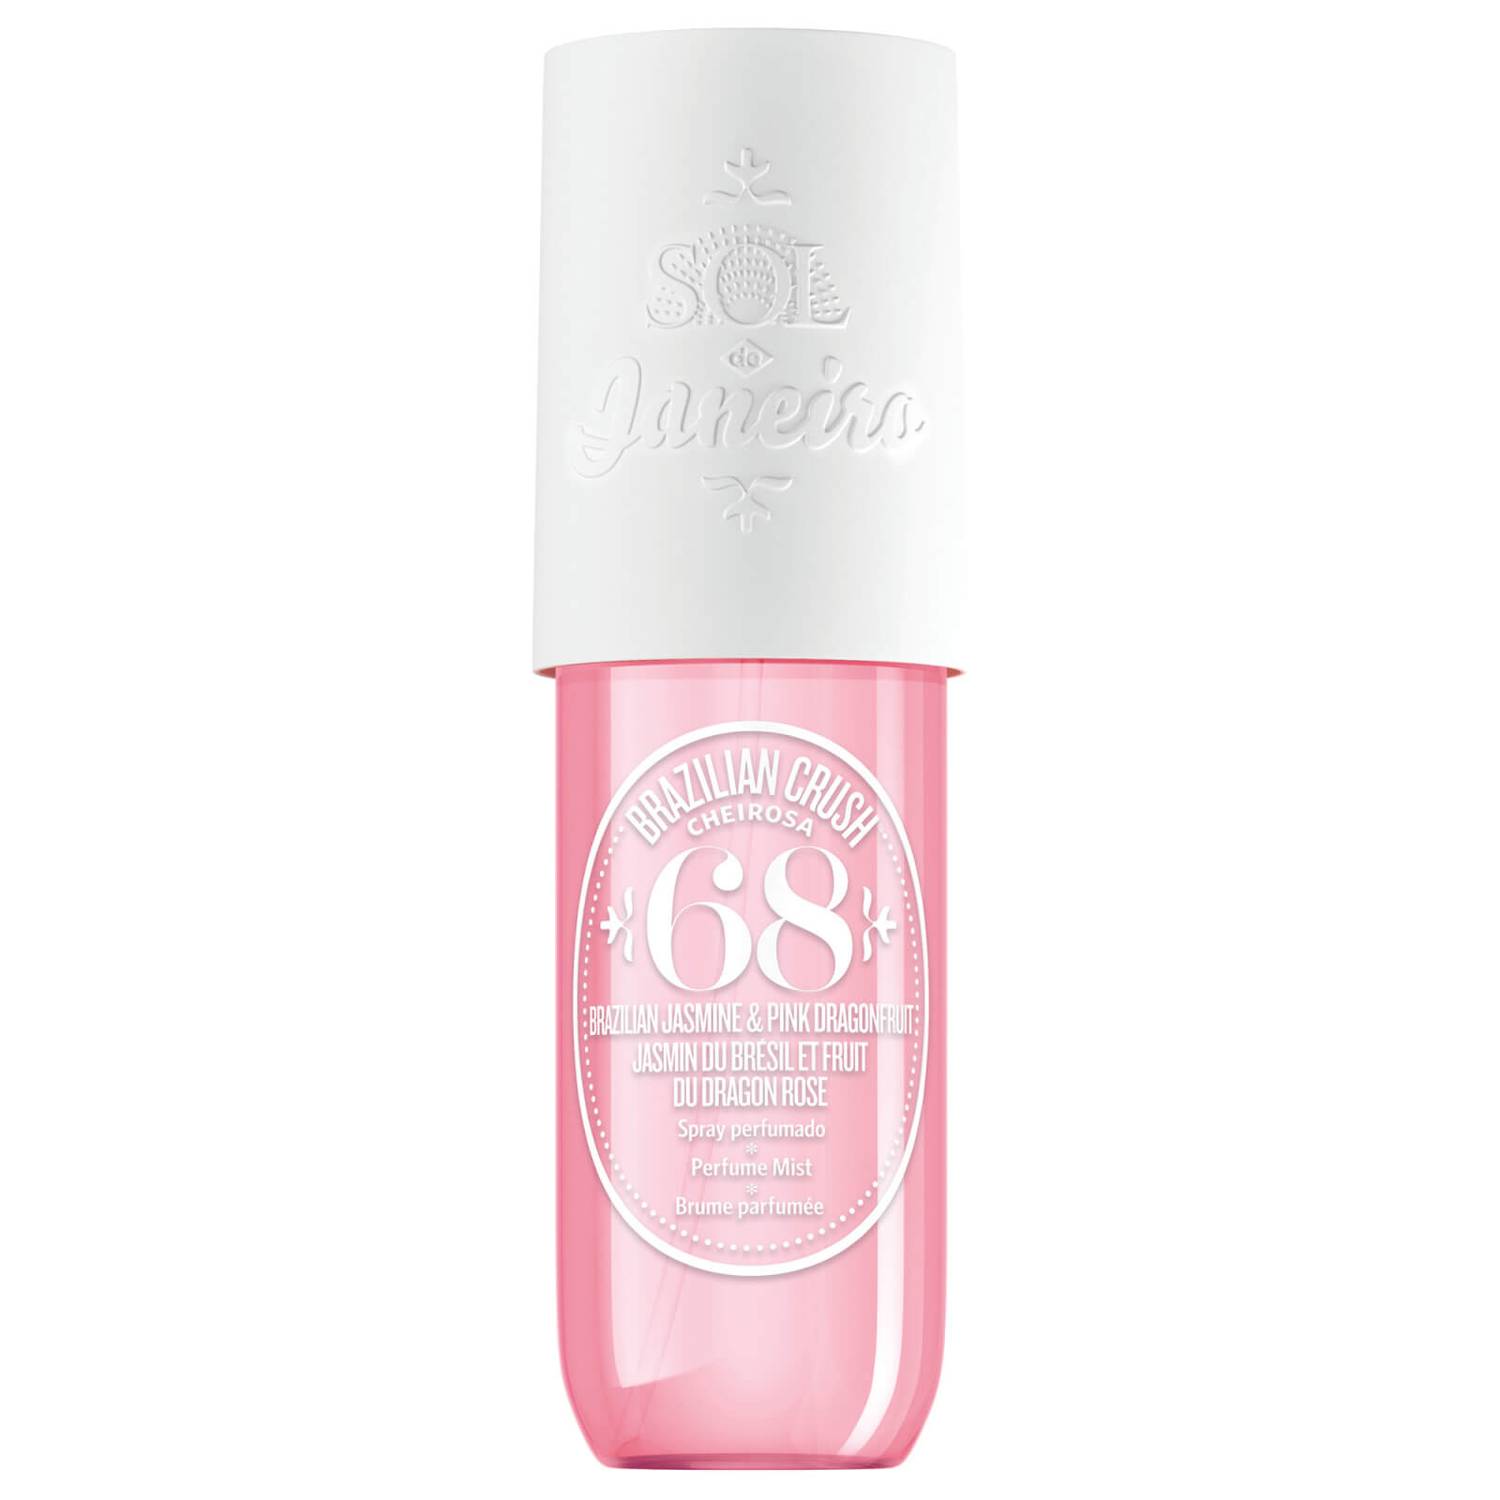 Sol de Janeiro Cheirosa 68 Perfume Mist 240ml Grace Beauty